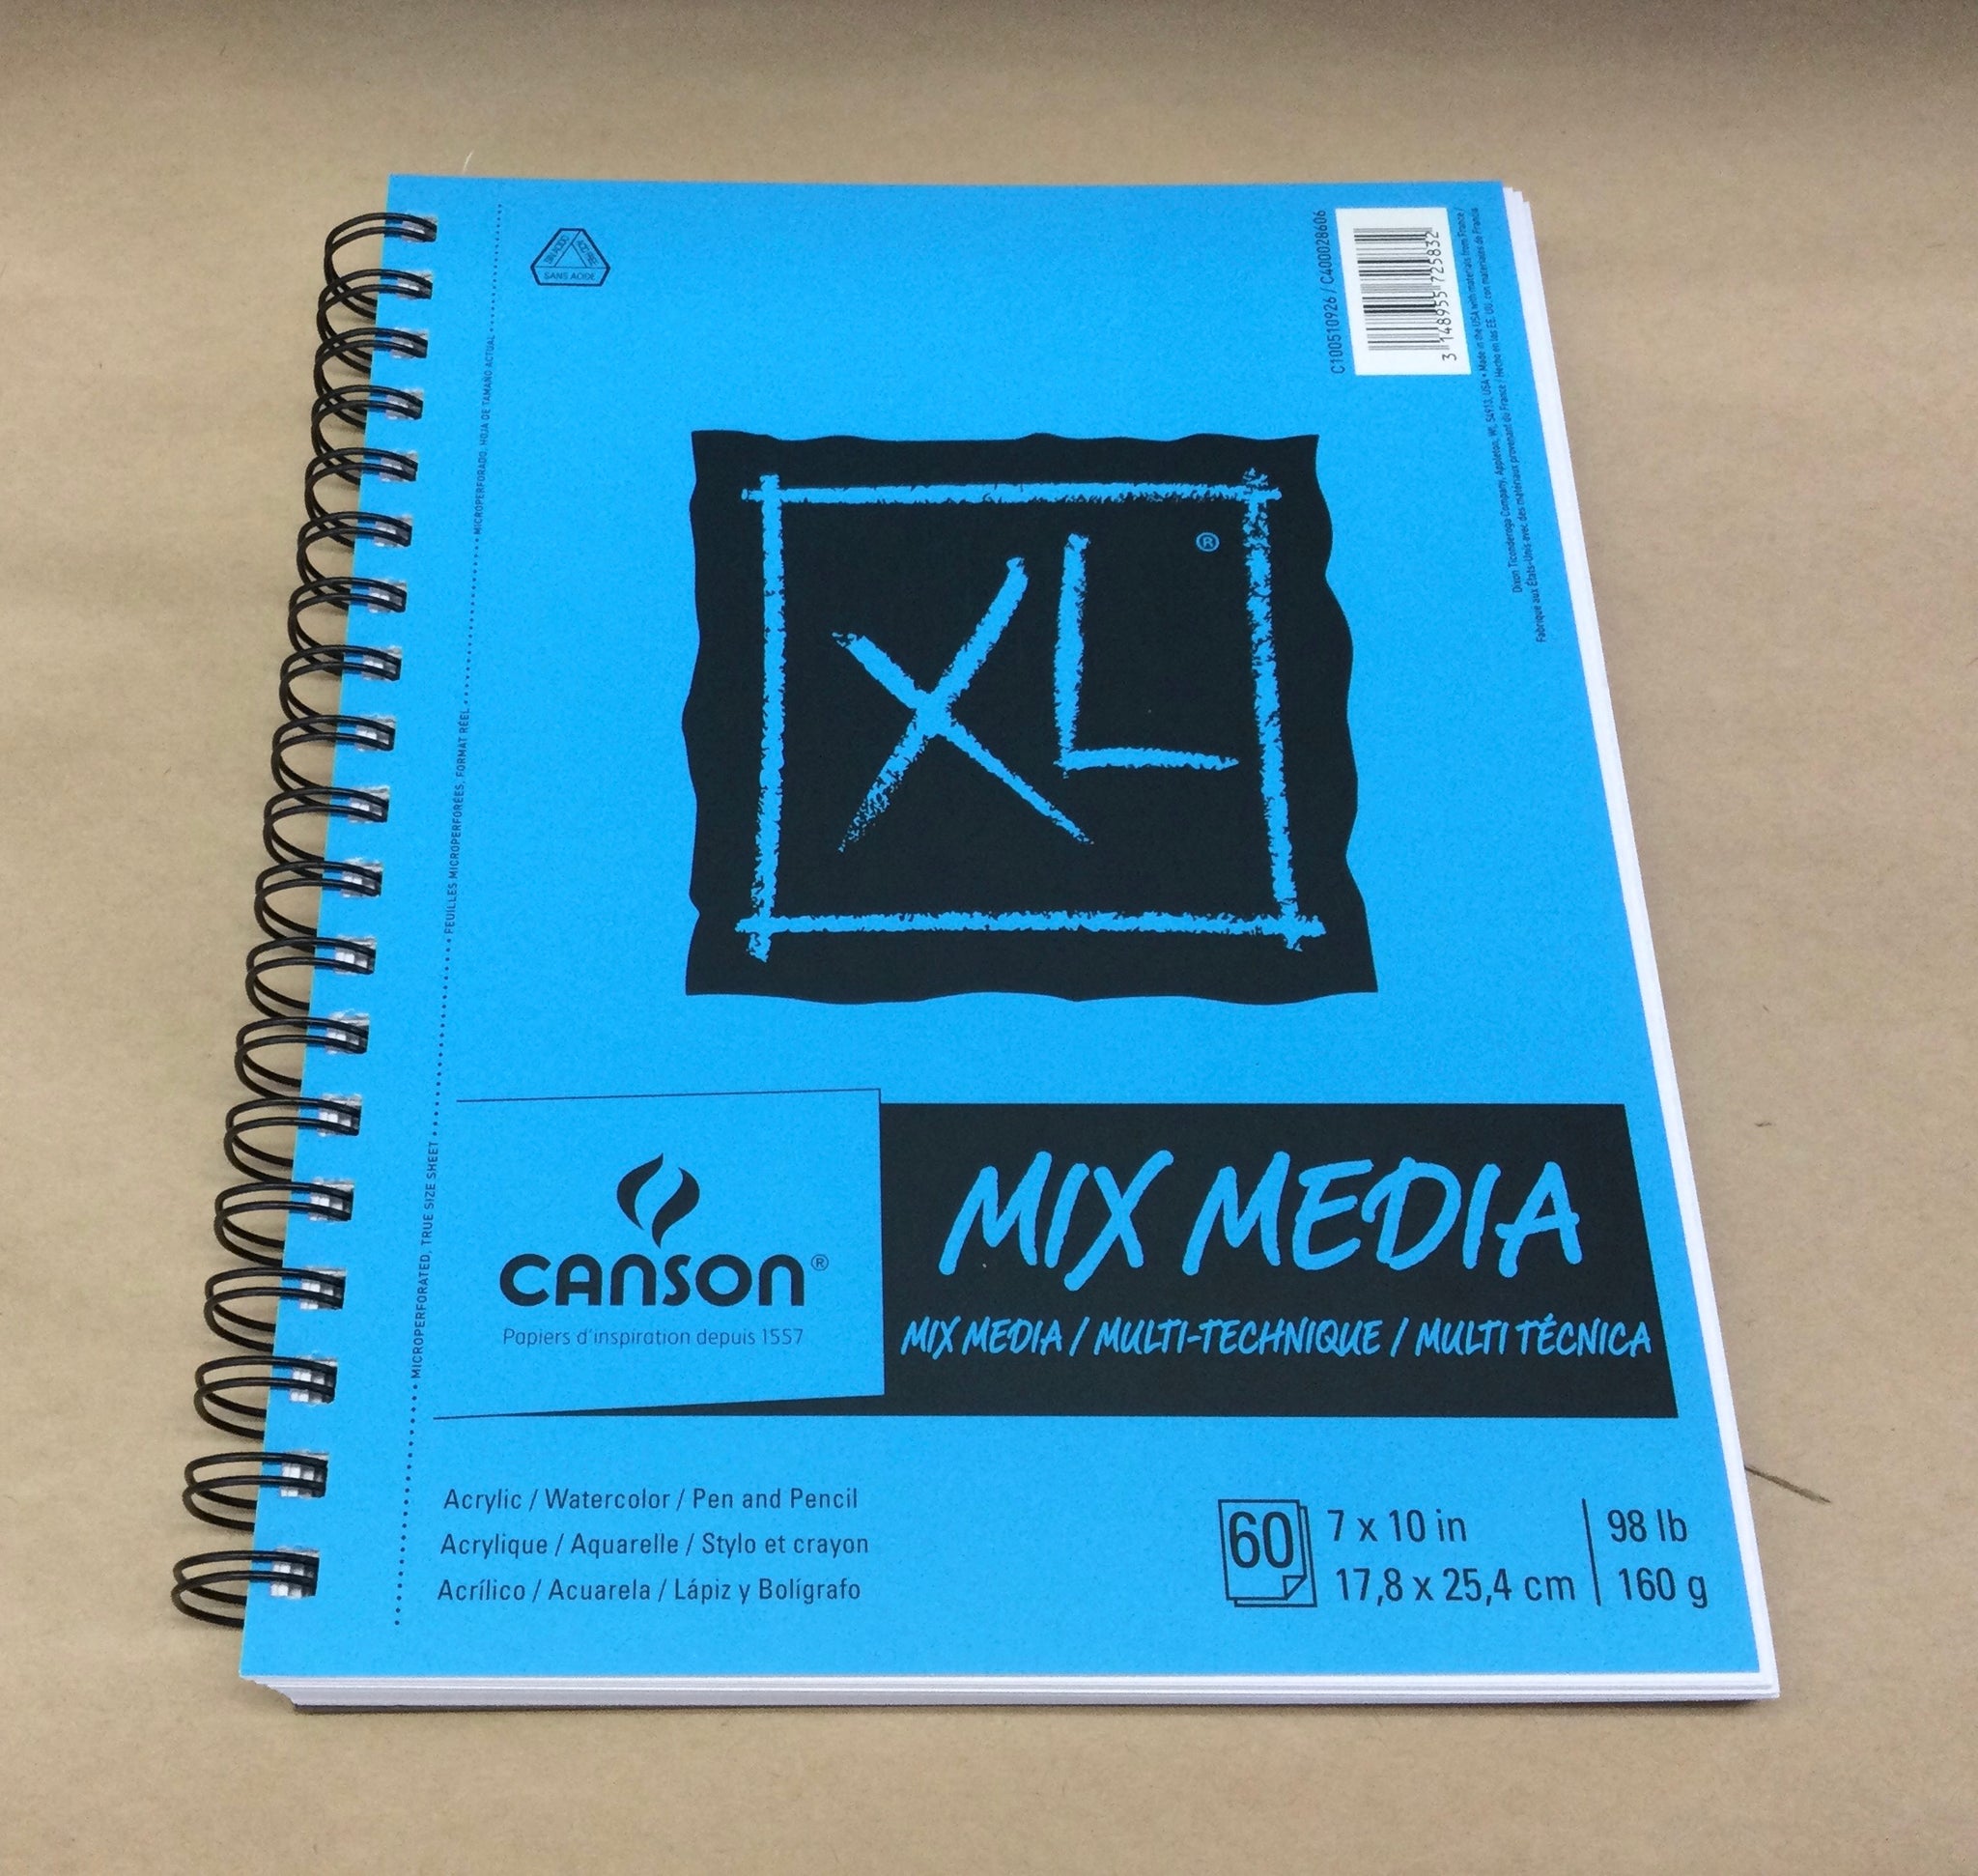 Canson - Mix media, Sheets 98lb/ books